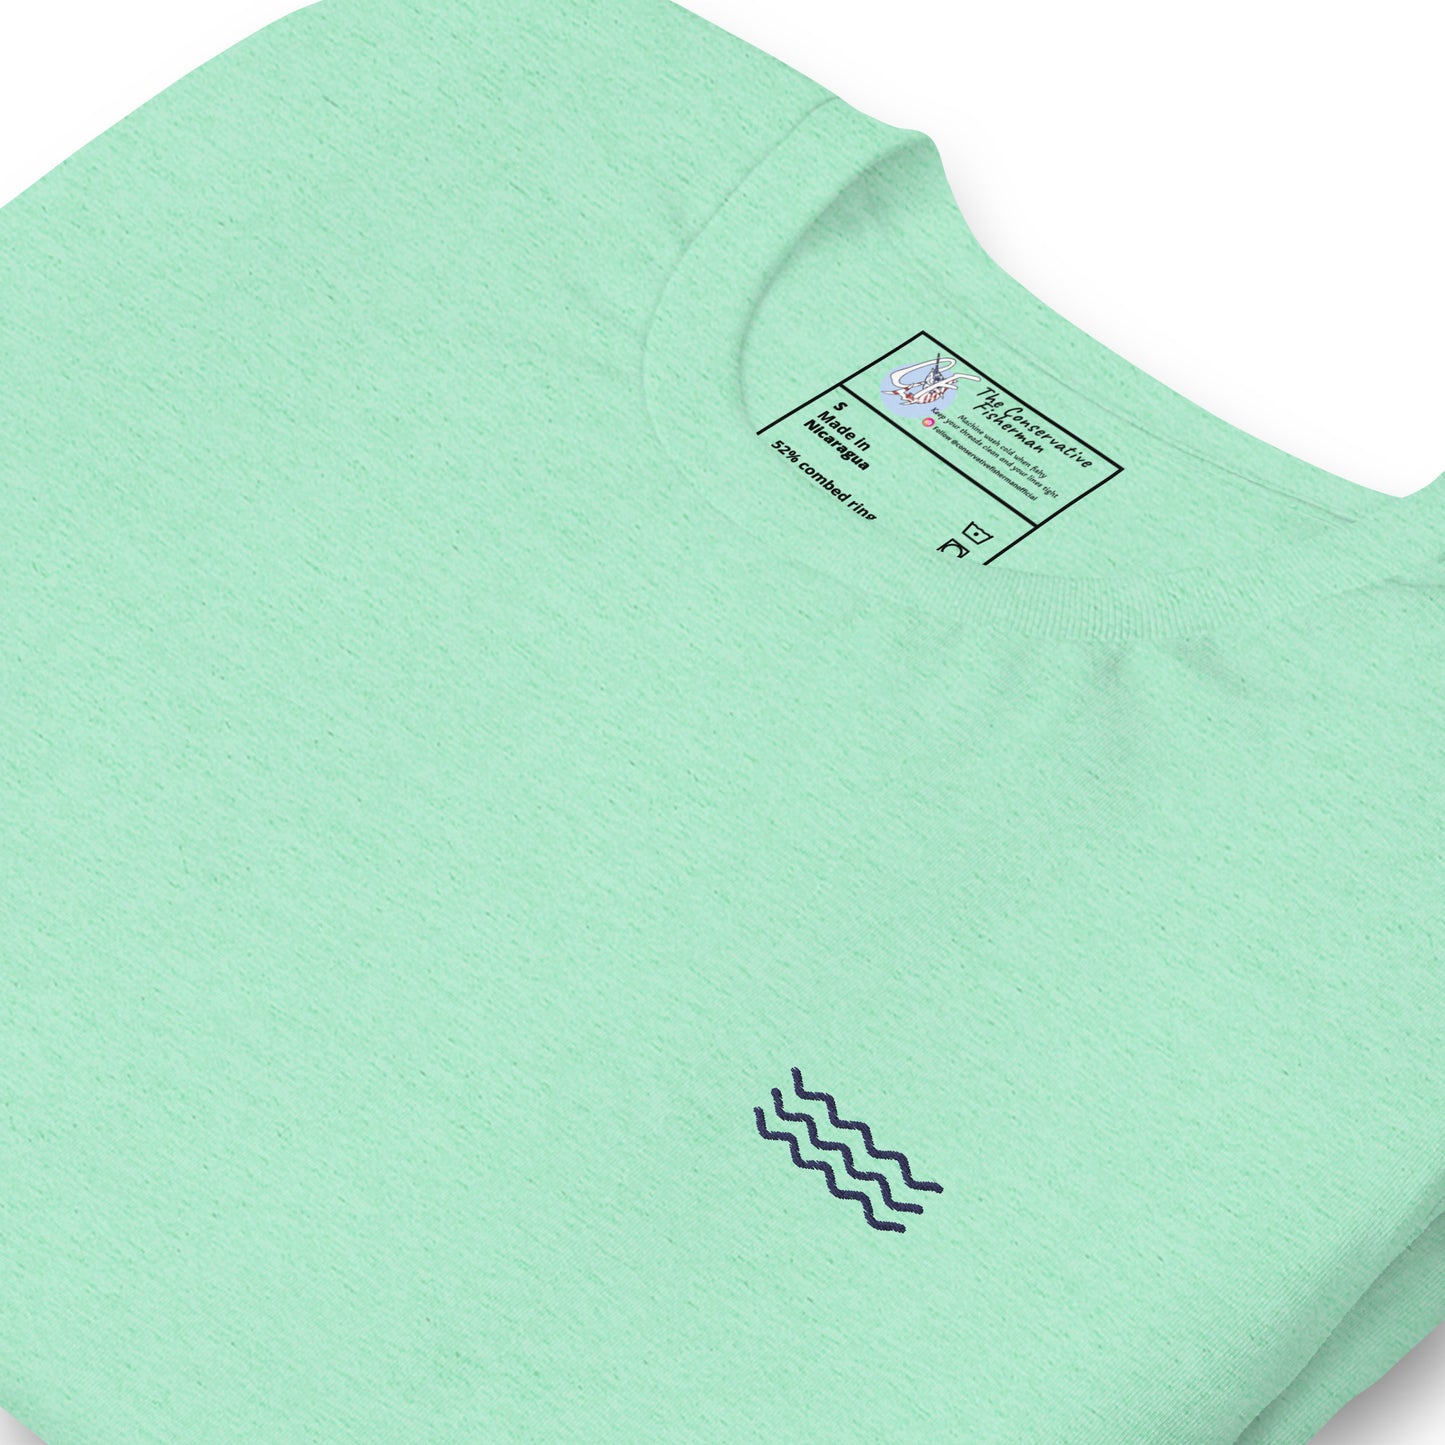 'Ocean Waves' Premium Embroidered Shirt